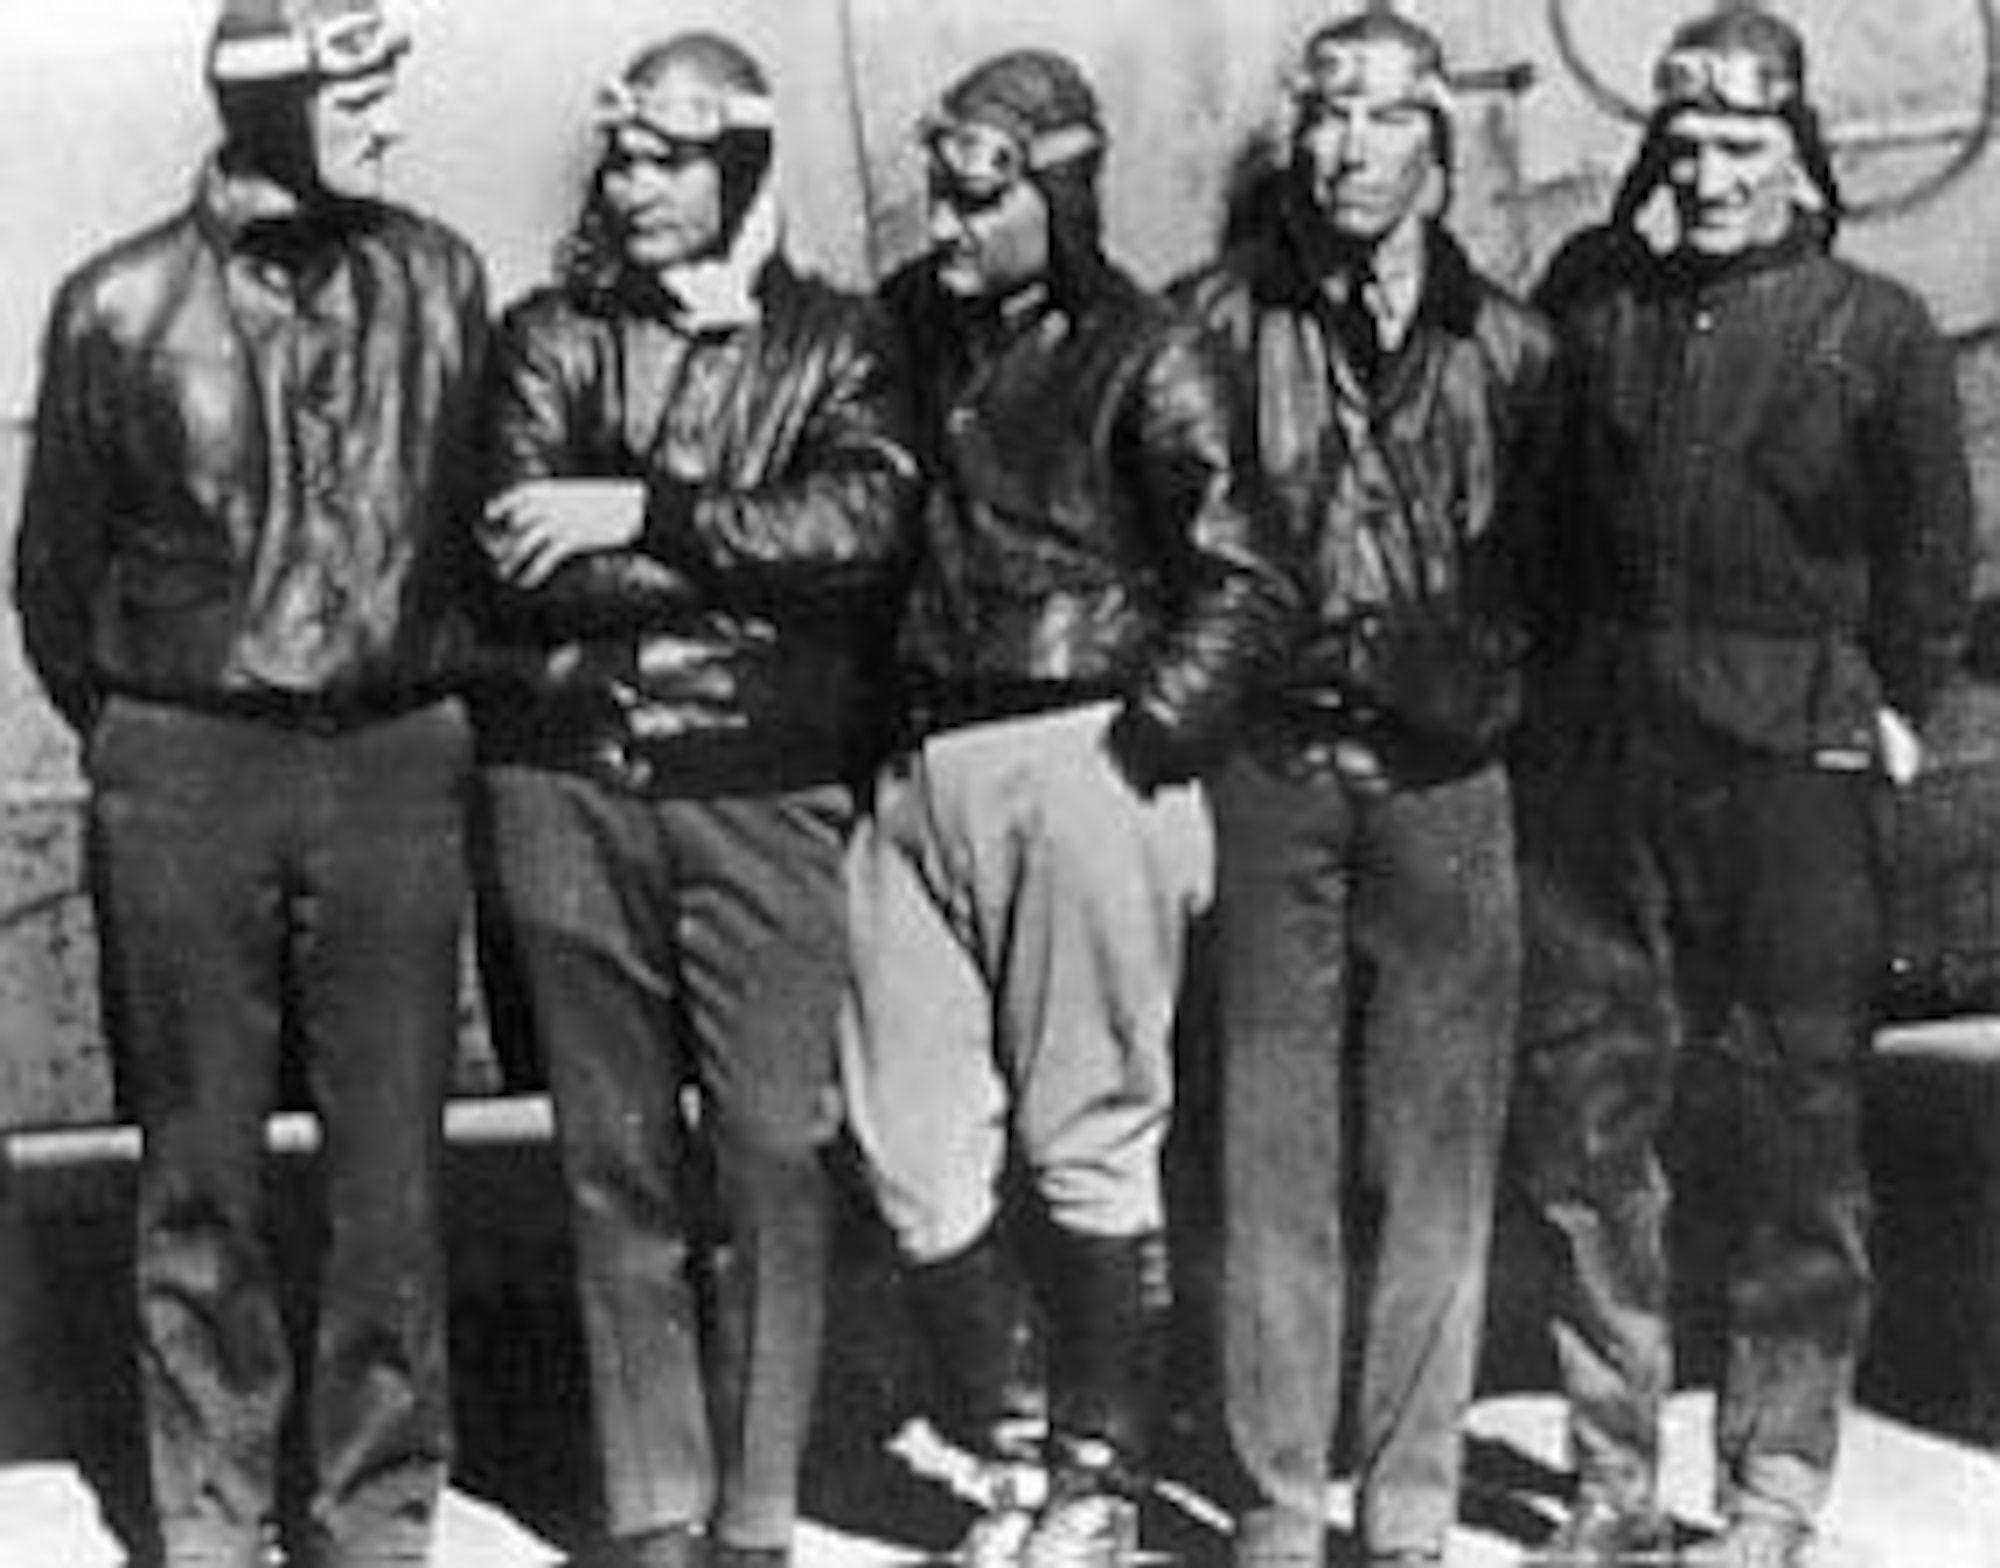 The crew of the Question Mark: Maj. Carl Spaatz, Capt. Ira Eaker, Lt. H.A. Halverson, Lt. E.R. Quesada and Sgt. R.W. Hooe. (U.S. Air Force photo)